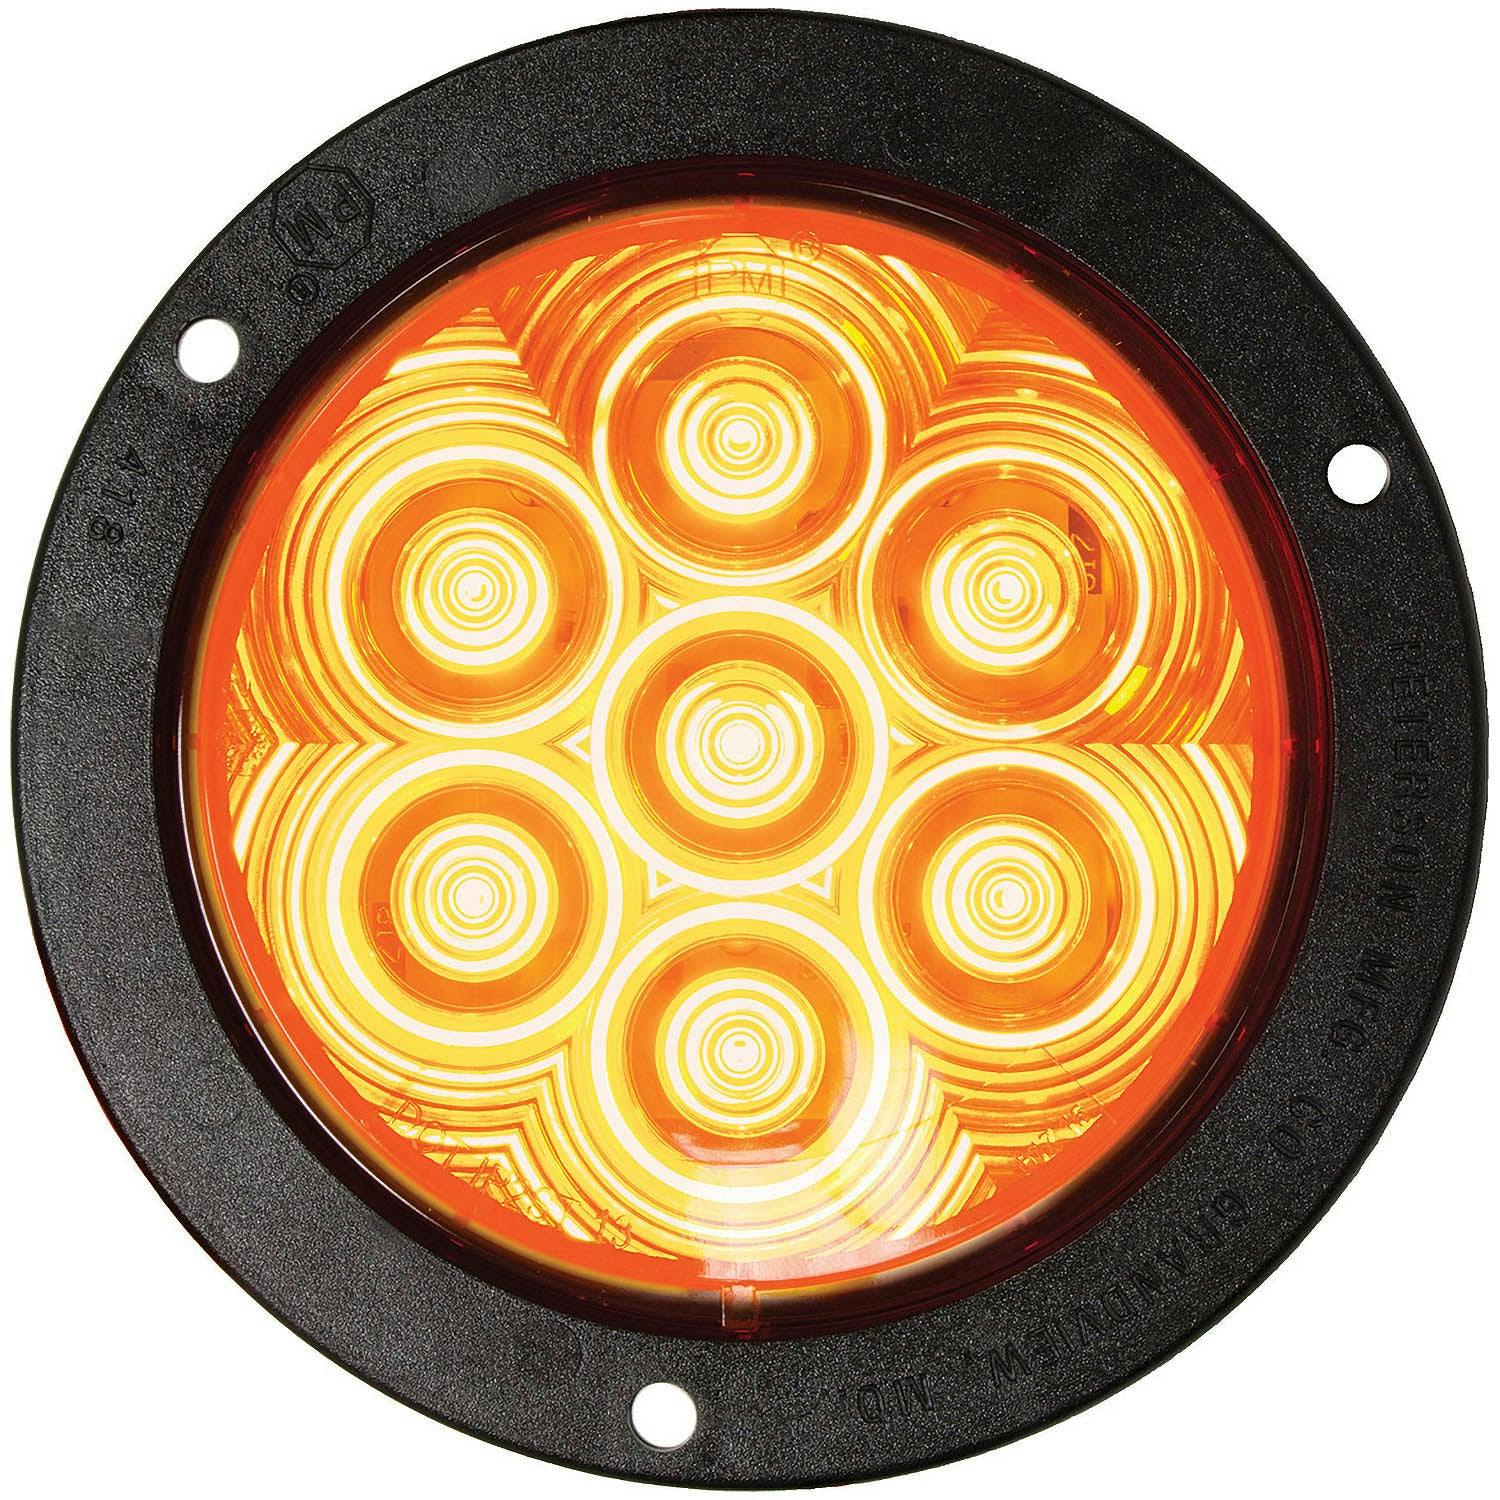 LED Turn Signal, Front & Rear, Round, AMP, Flange-Mount 4", amber, bulk pack (Pack of 50) - 818A-7_813f764f-e489-4f1a-9267-13f641b20964